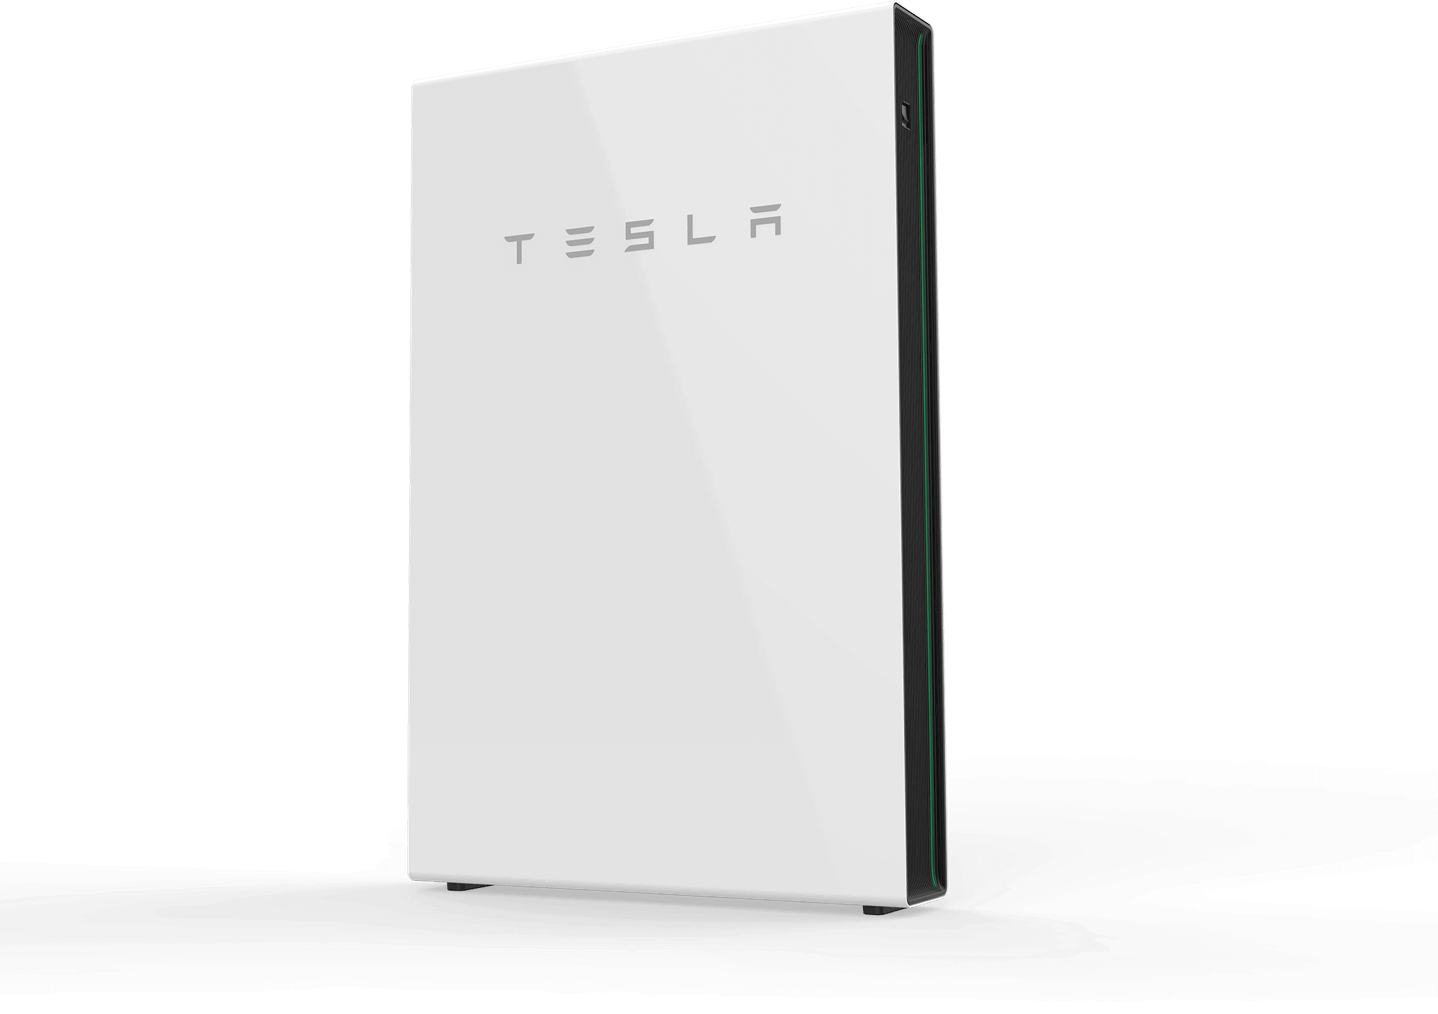 Tesla Powerwall Render